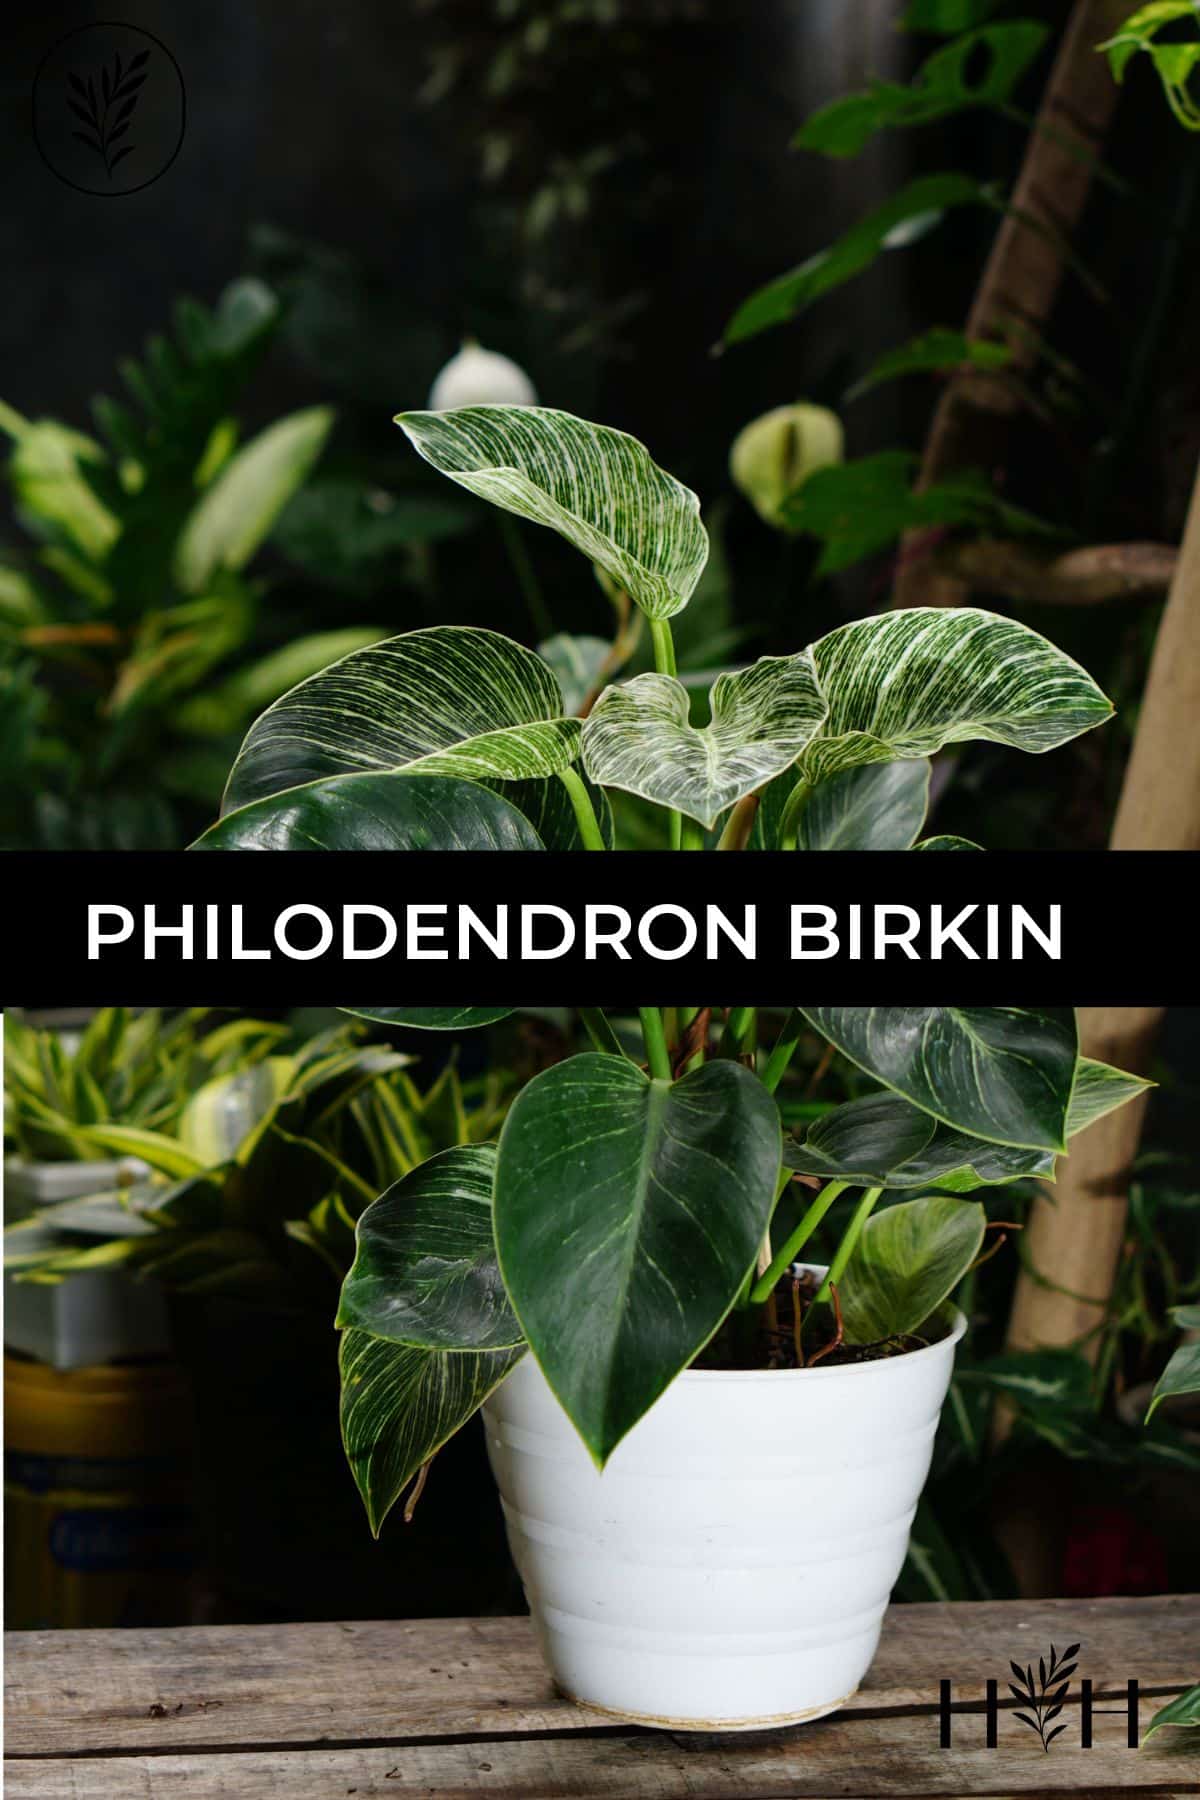 Philodendron birkin via @home4theharvest